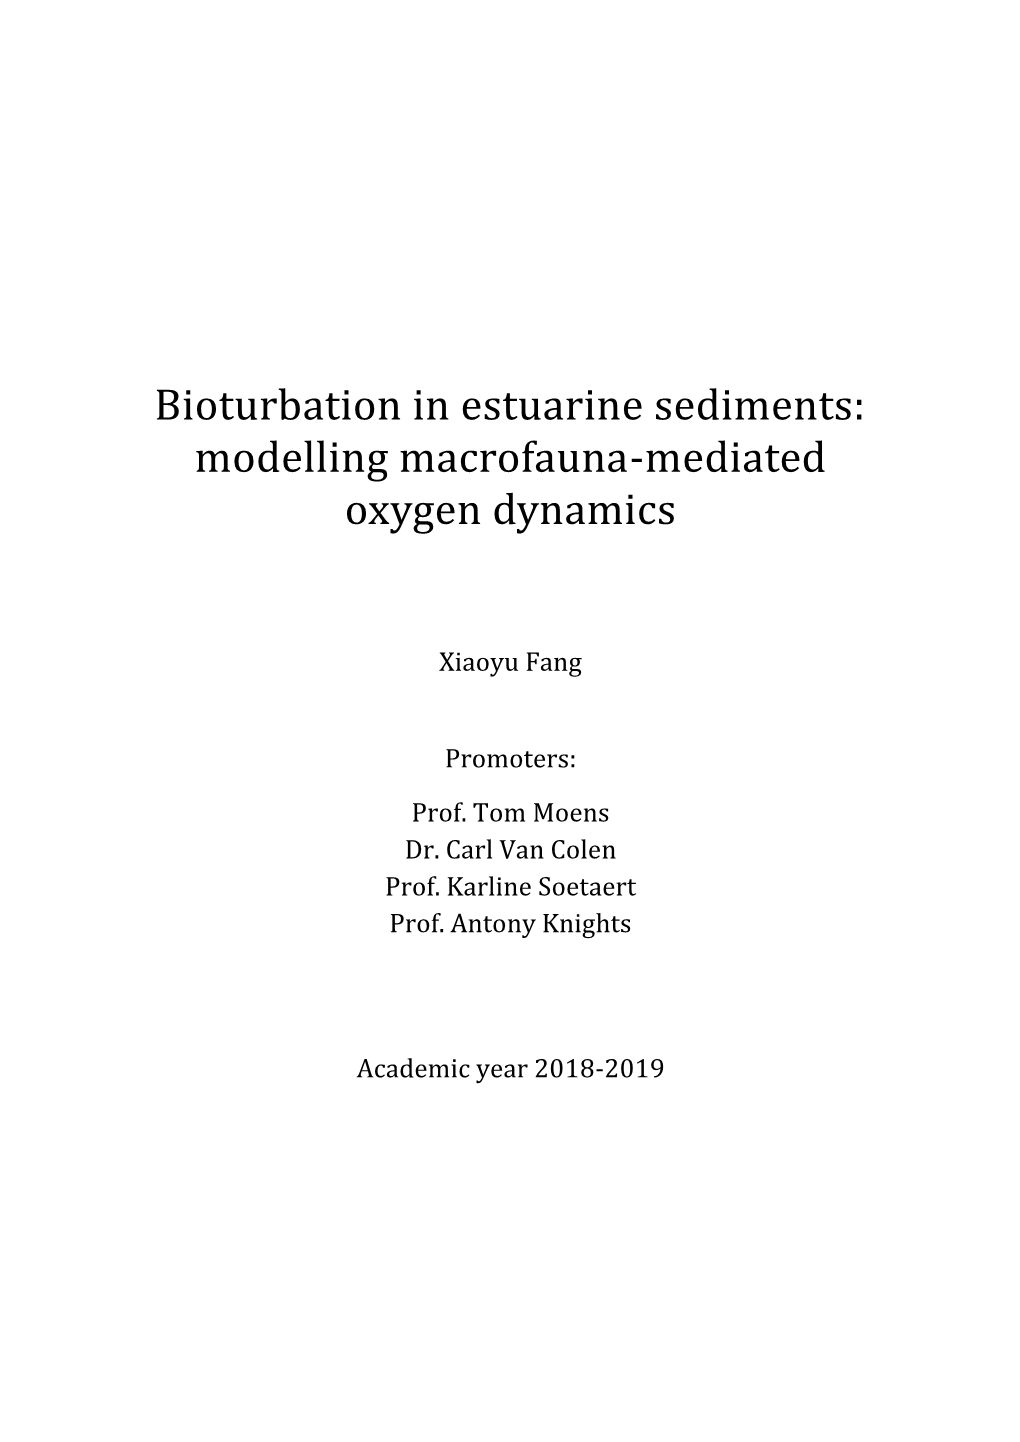 Bioturbation in Estuarine Sediments: Modelling Macrofauna-Mediated Oxygen Dynamics